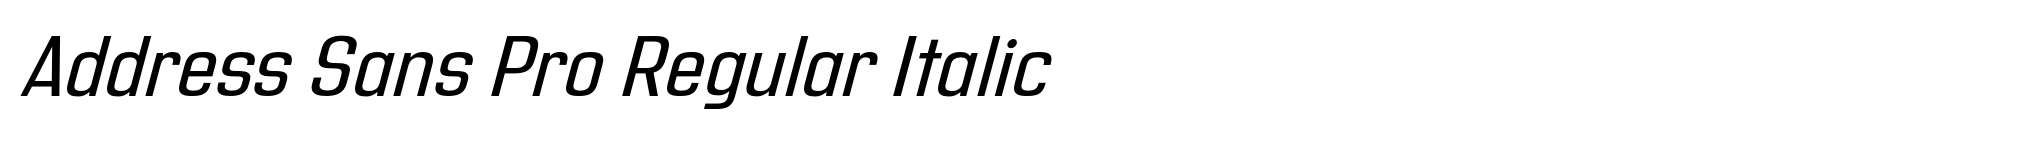 Address Sans Pro Regular Italic image